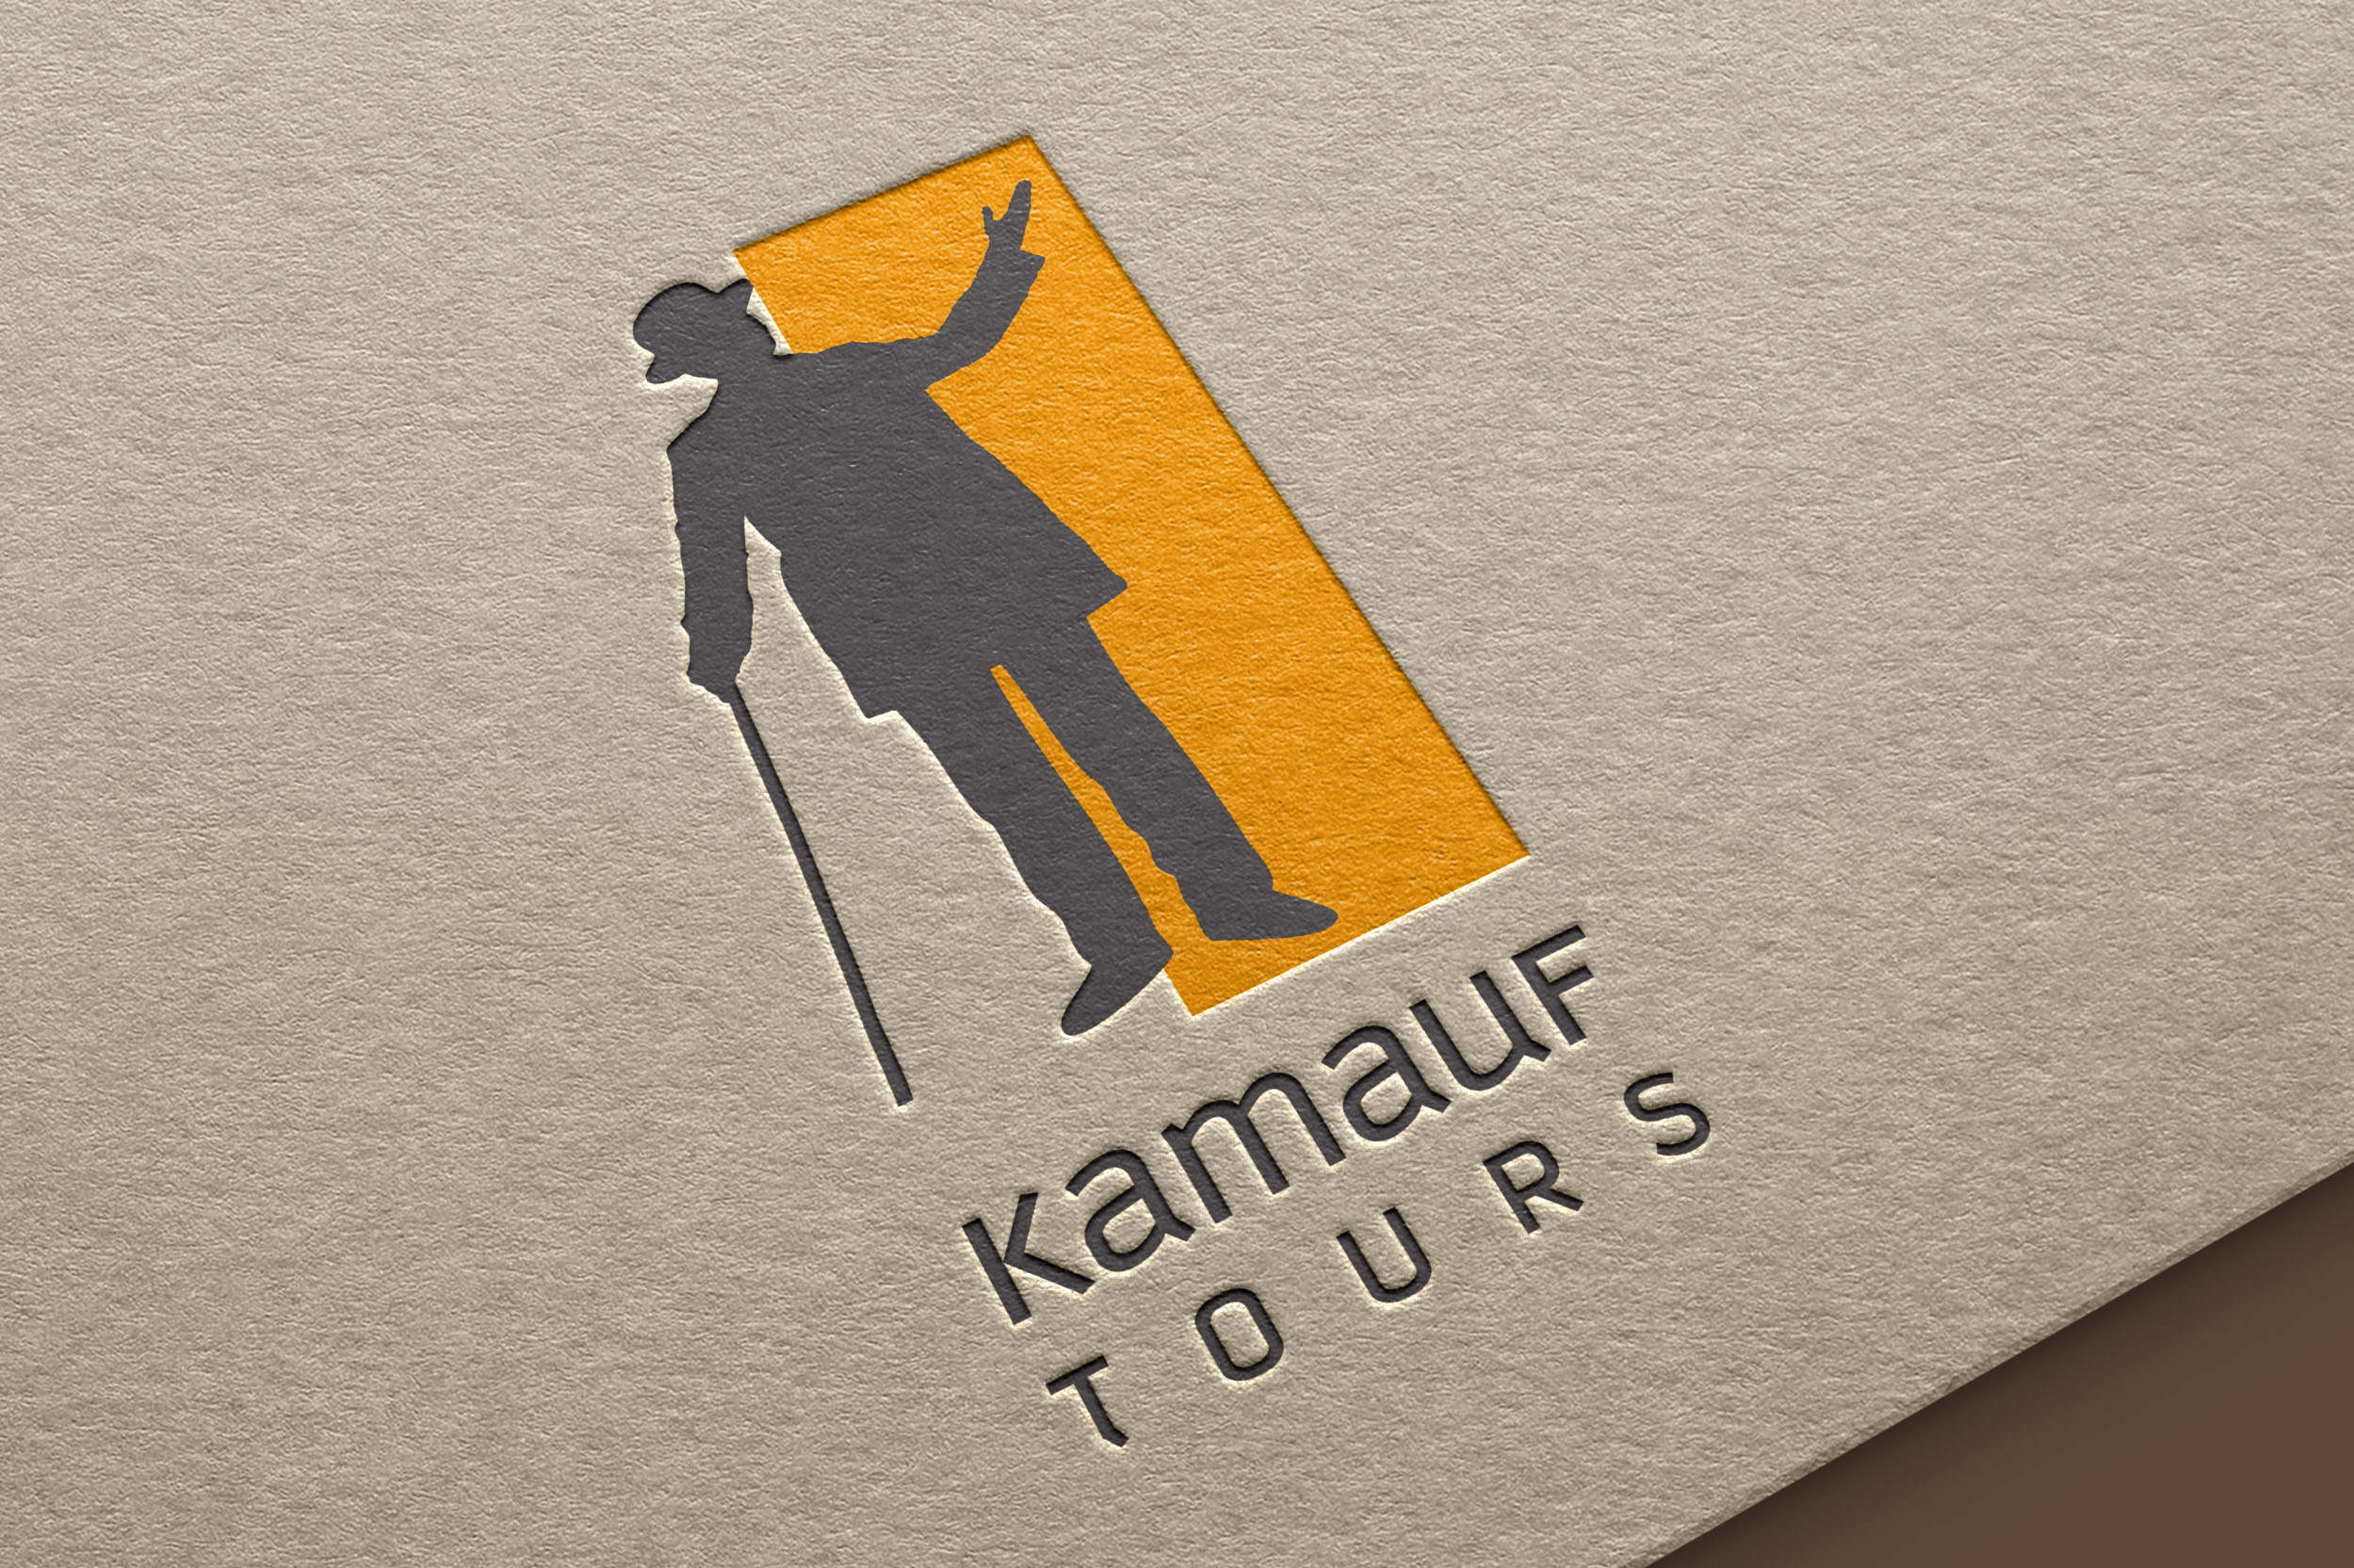 Kamauf tours